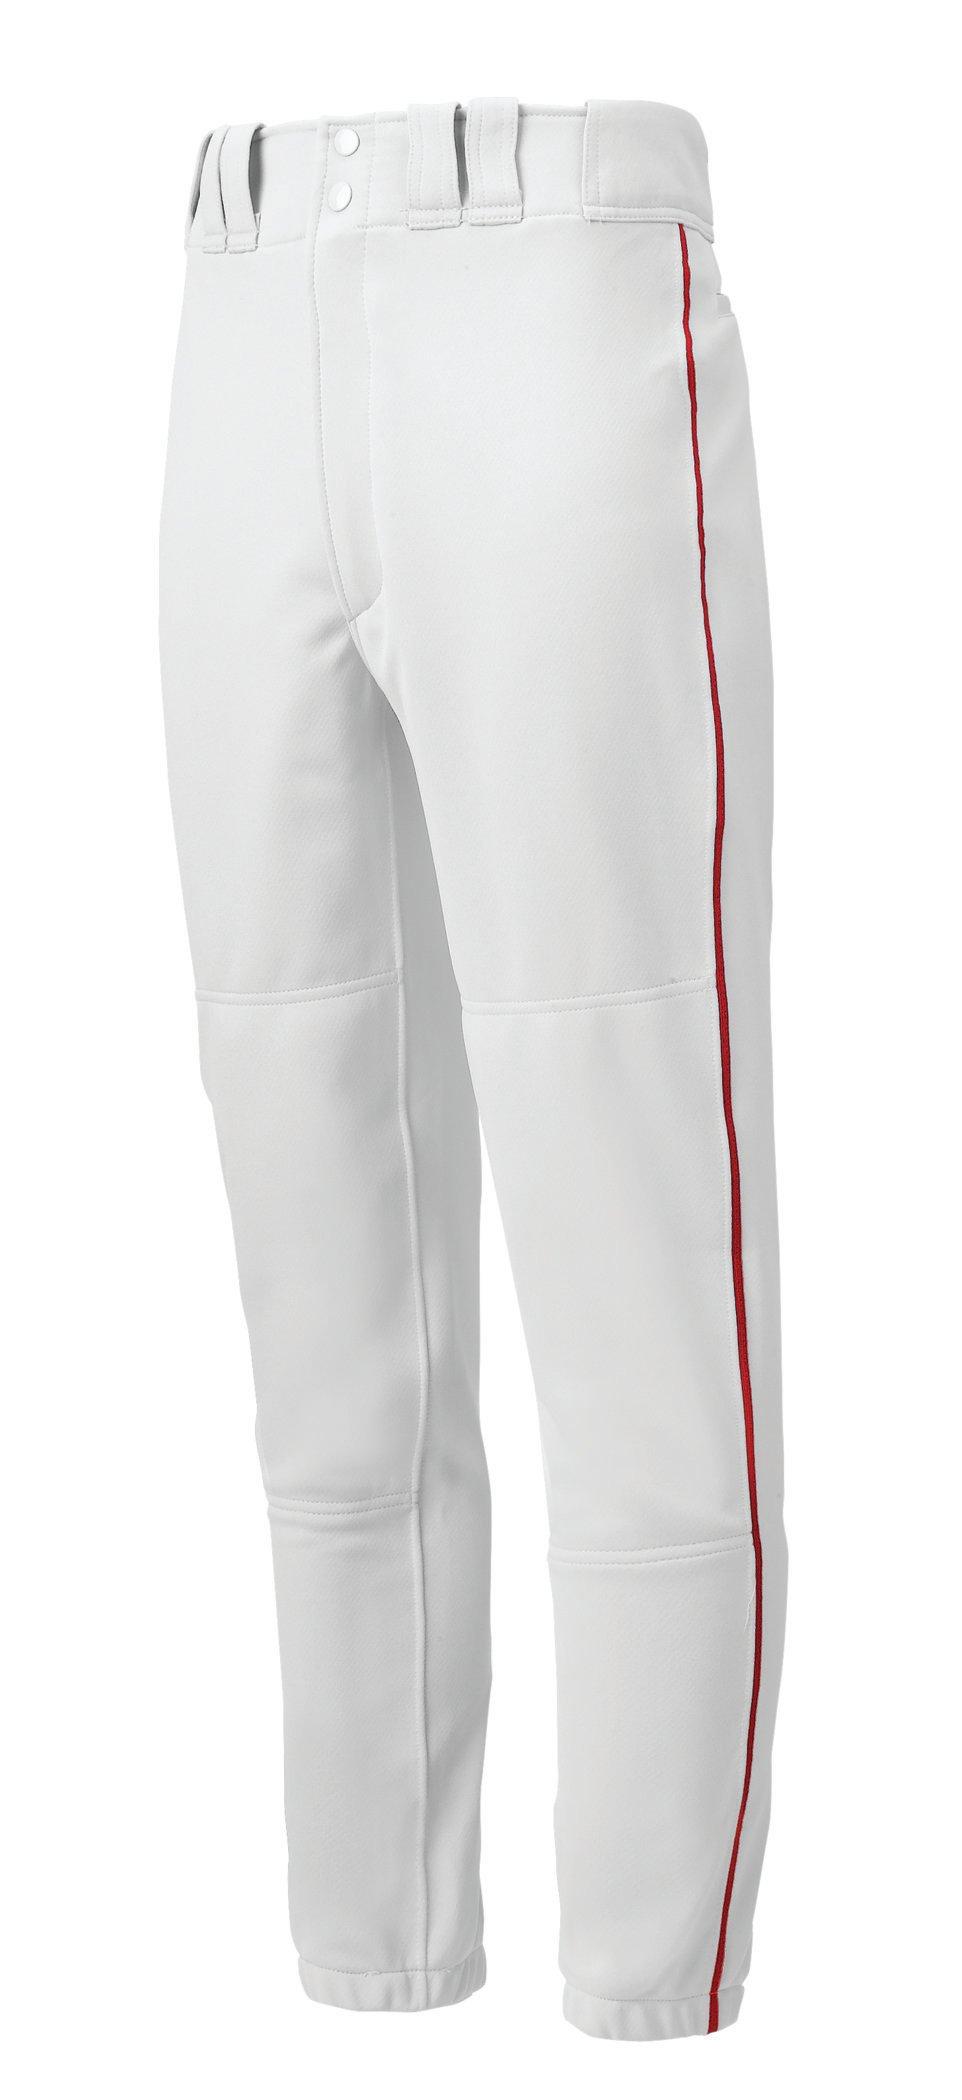 Mizuno 350389 Youth Select Pro Baseball Pants White Sizes NWT Size L 